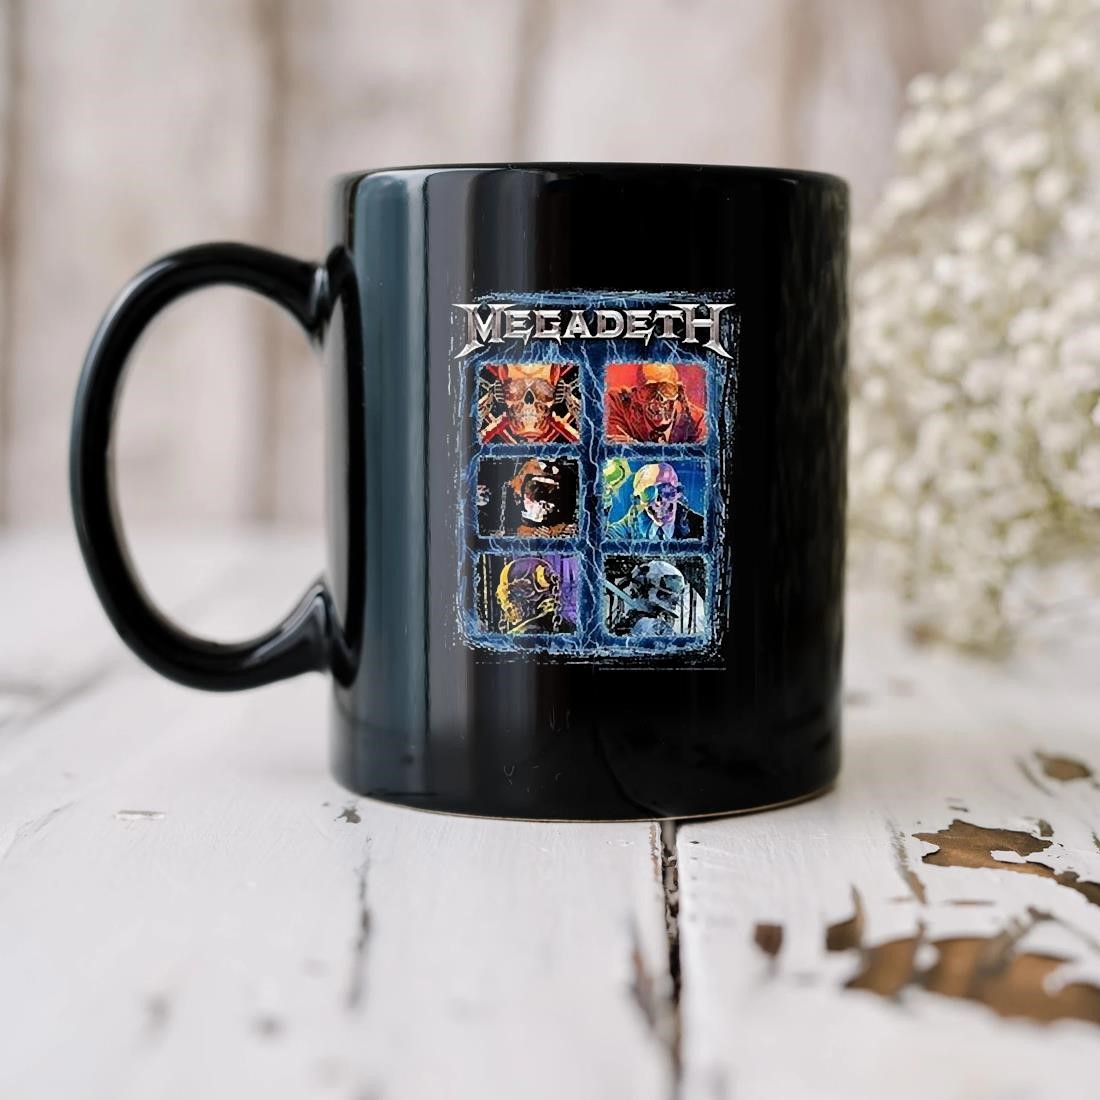 Official Megadeth Album Art Grid Mug biu.jpg